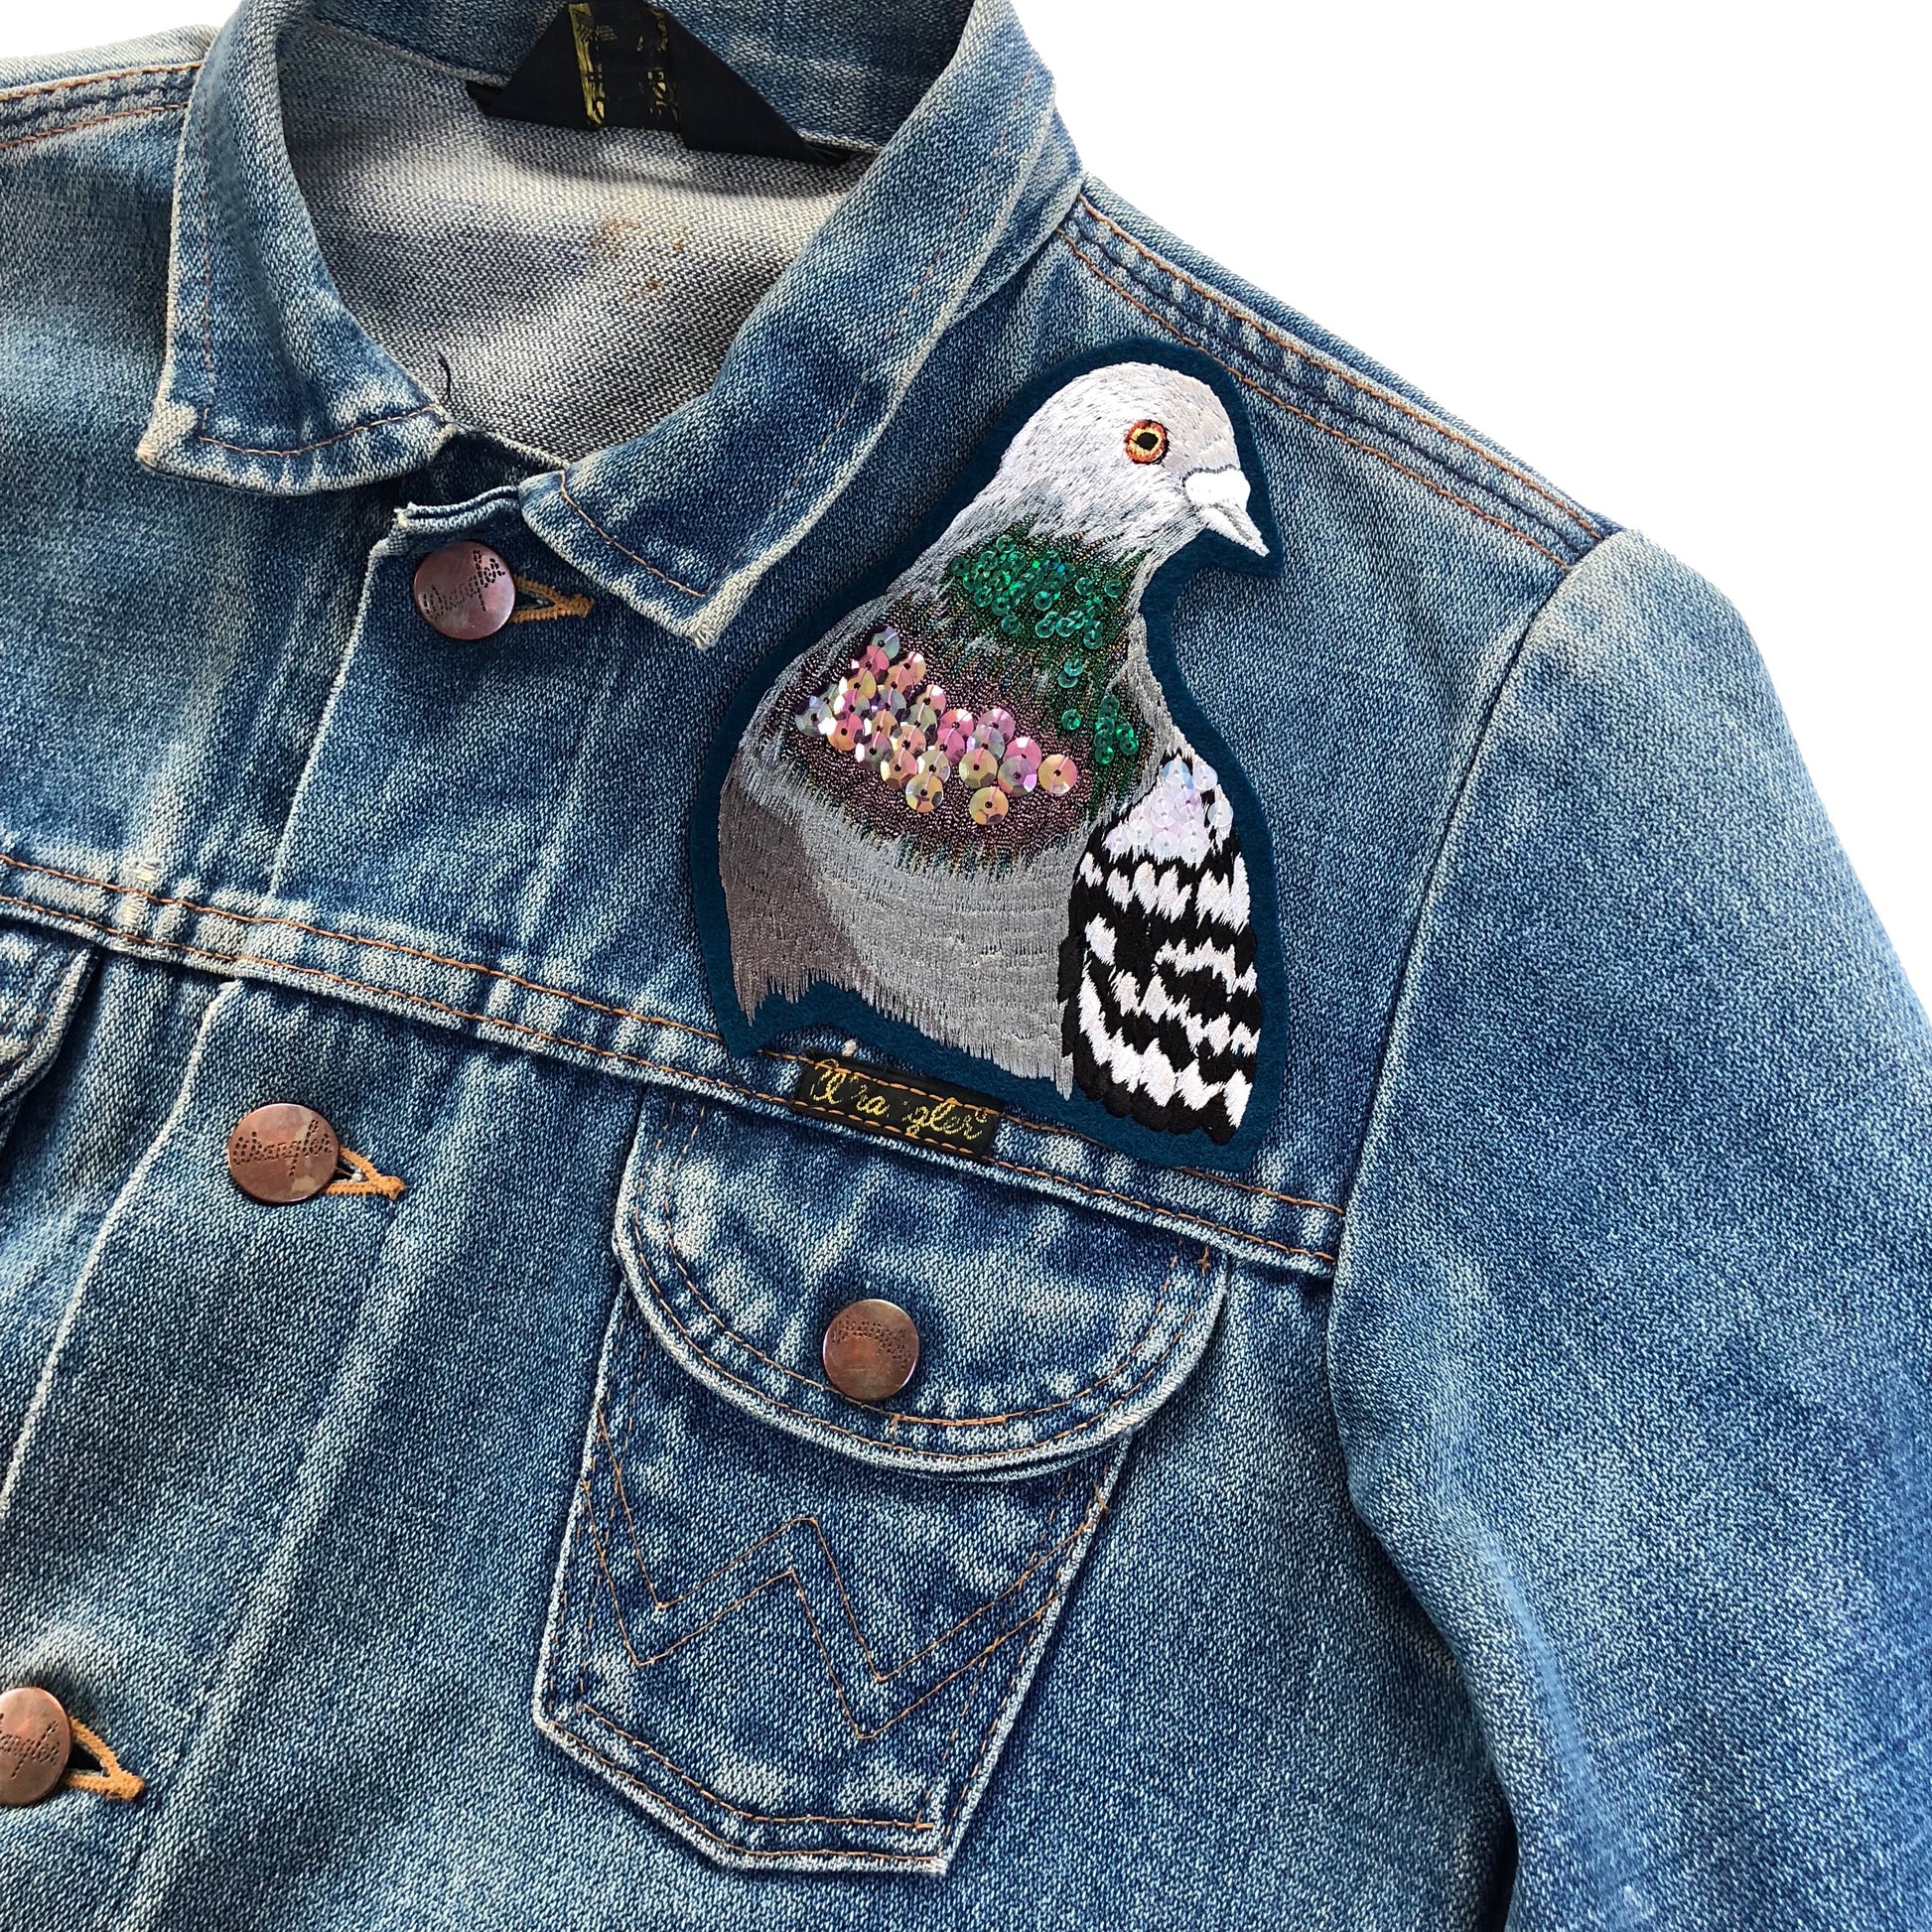 Sparkly pigeon portrait seen on the front shoulder of a blue denim jacket